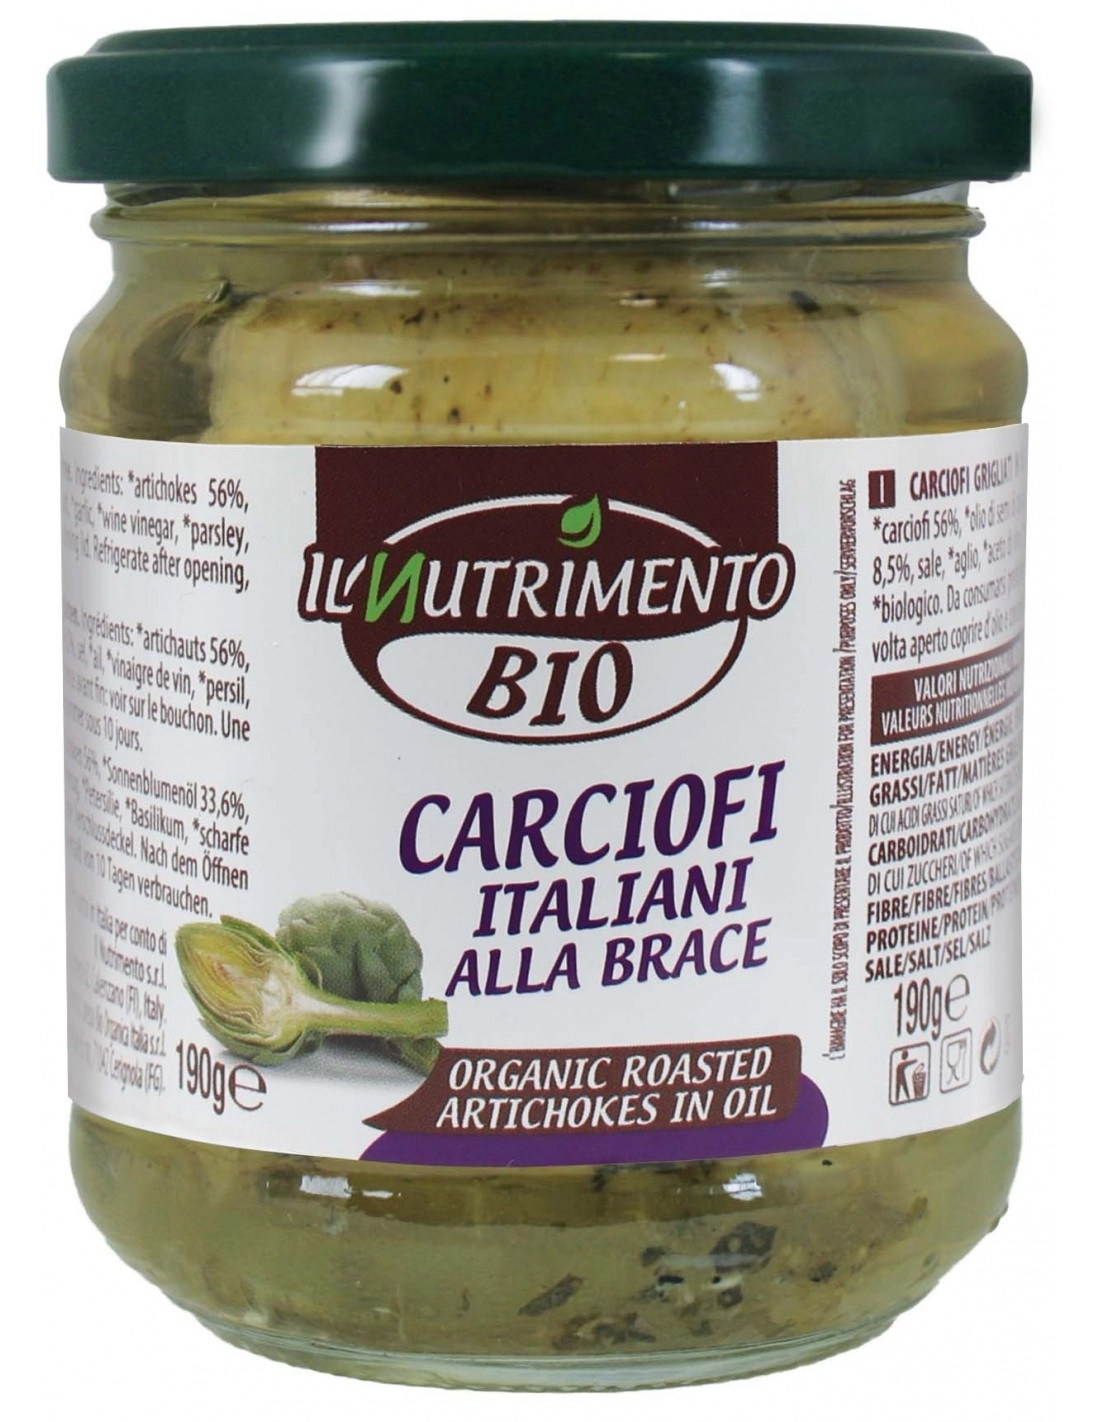 Image of Il Nutrimento Carciofi Alla Brace 190g